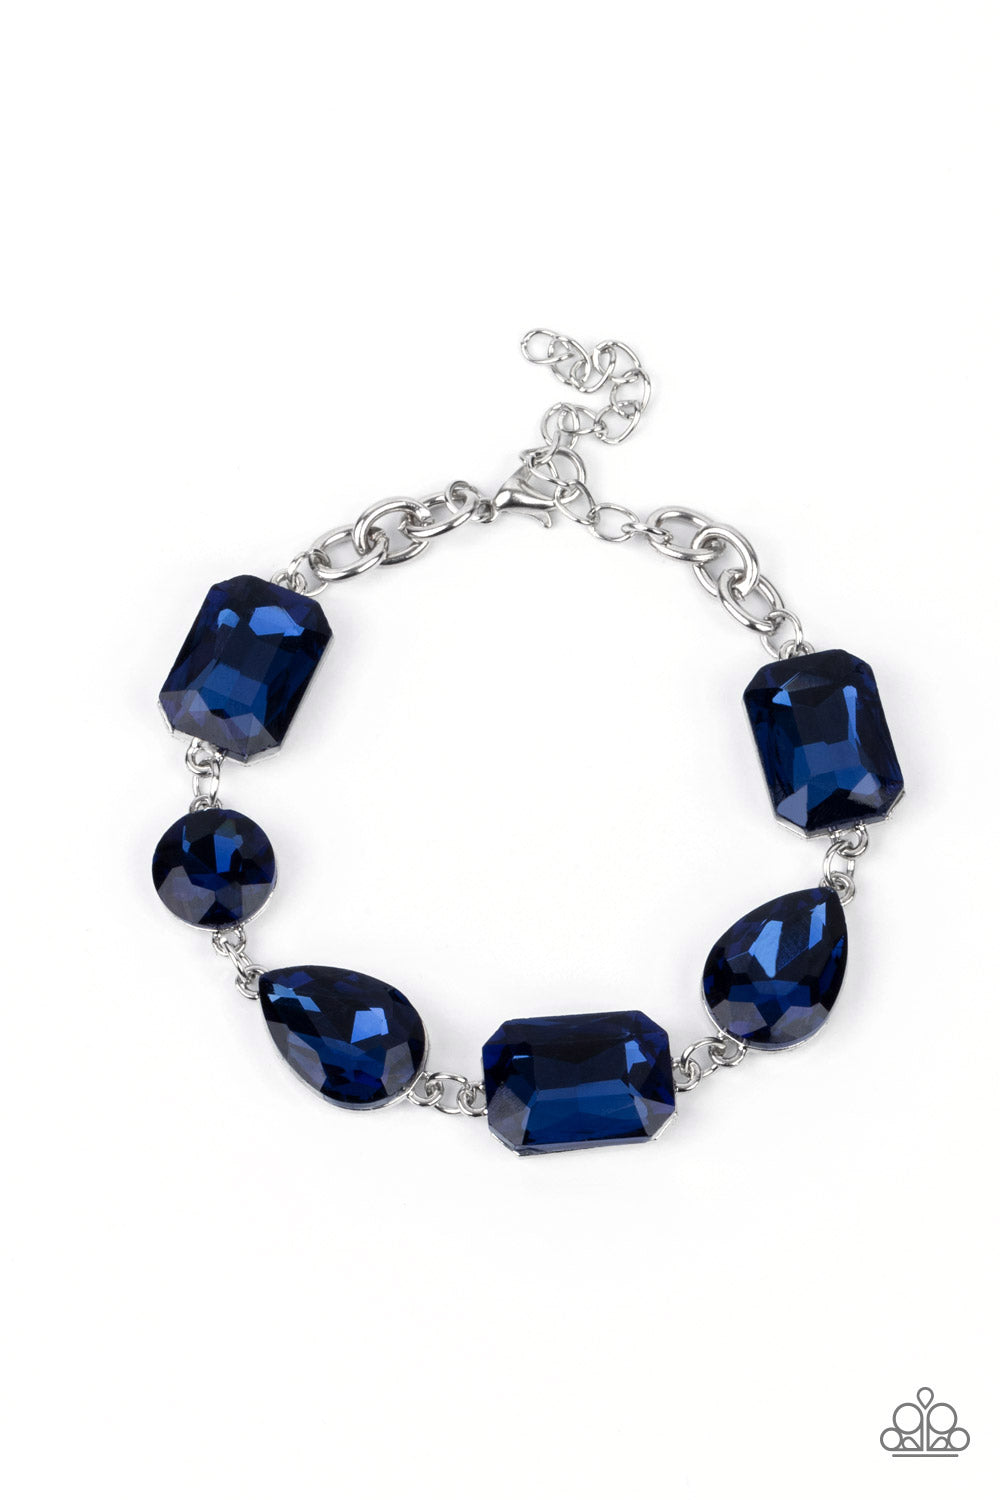 Cosmic Treasure Chest - Blue - Paparazzi Bracelet